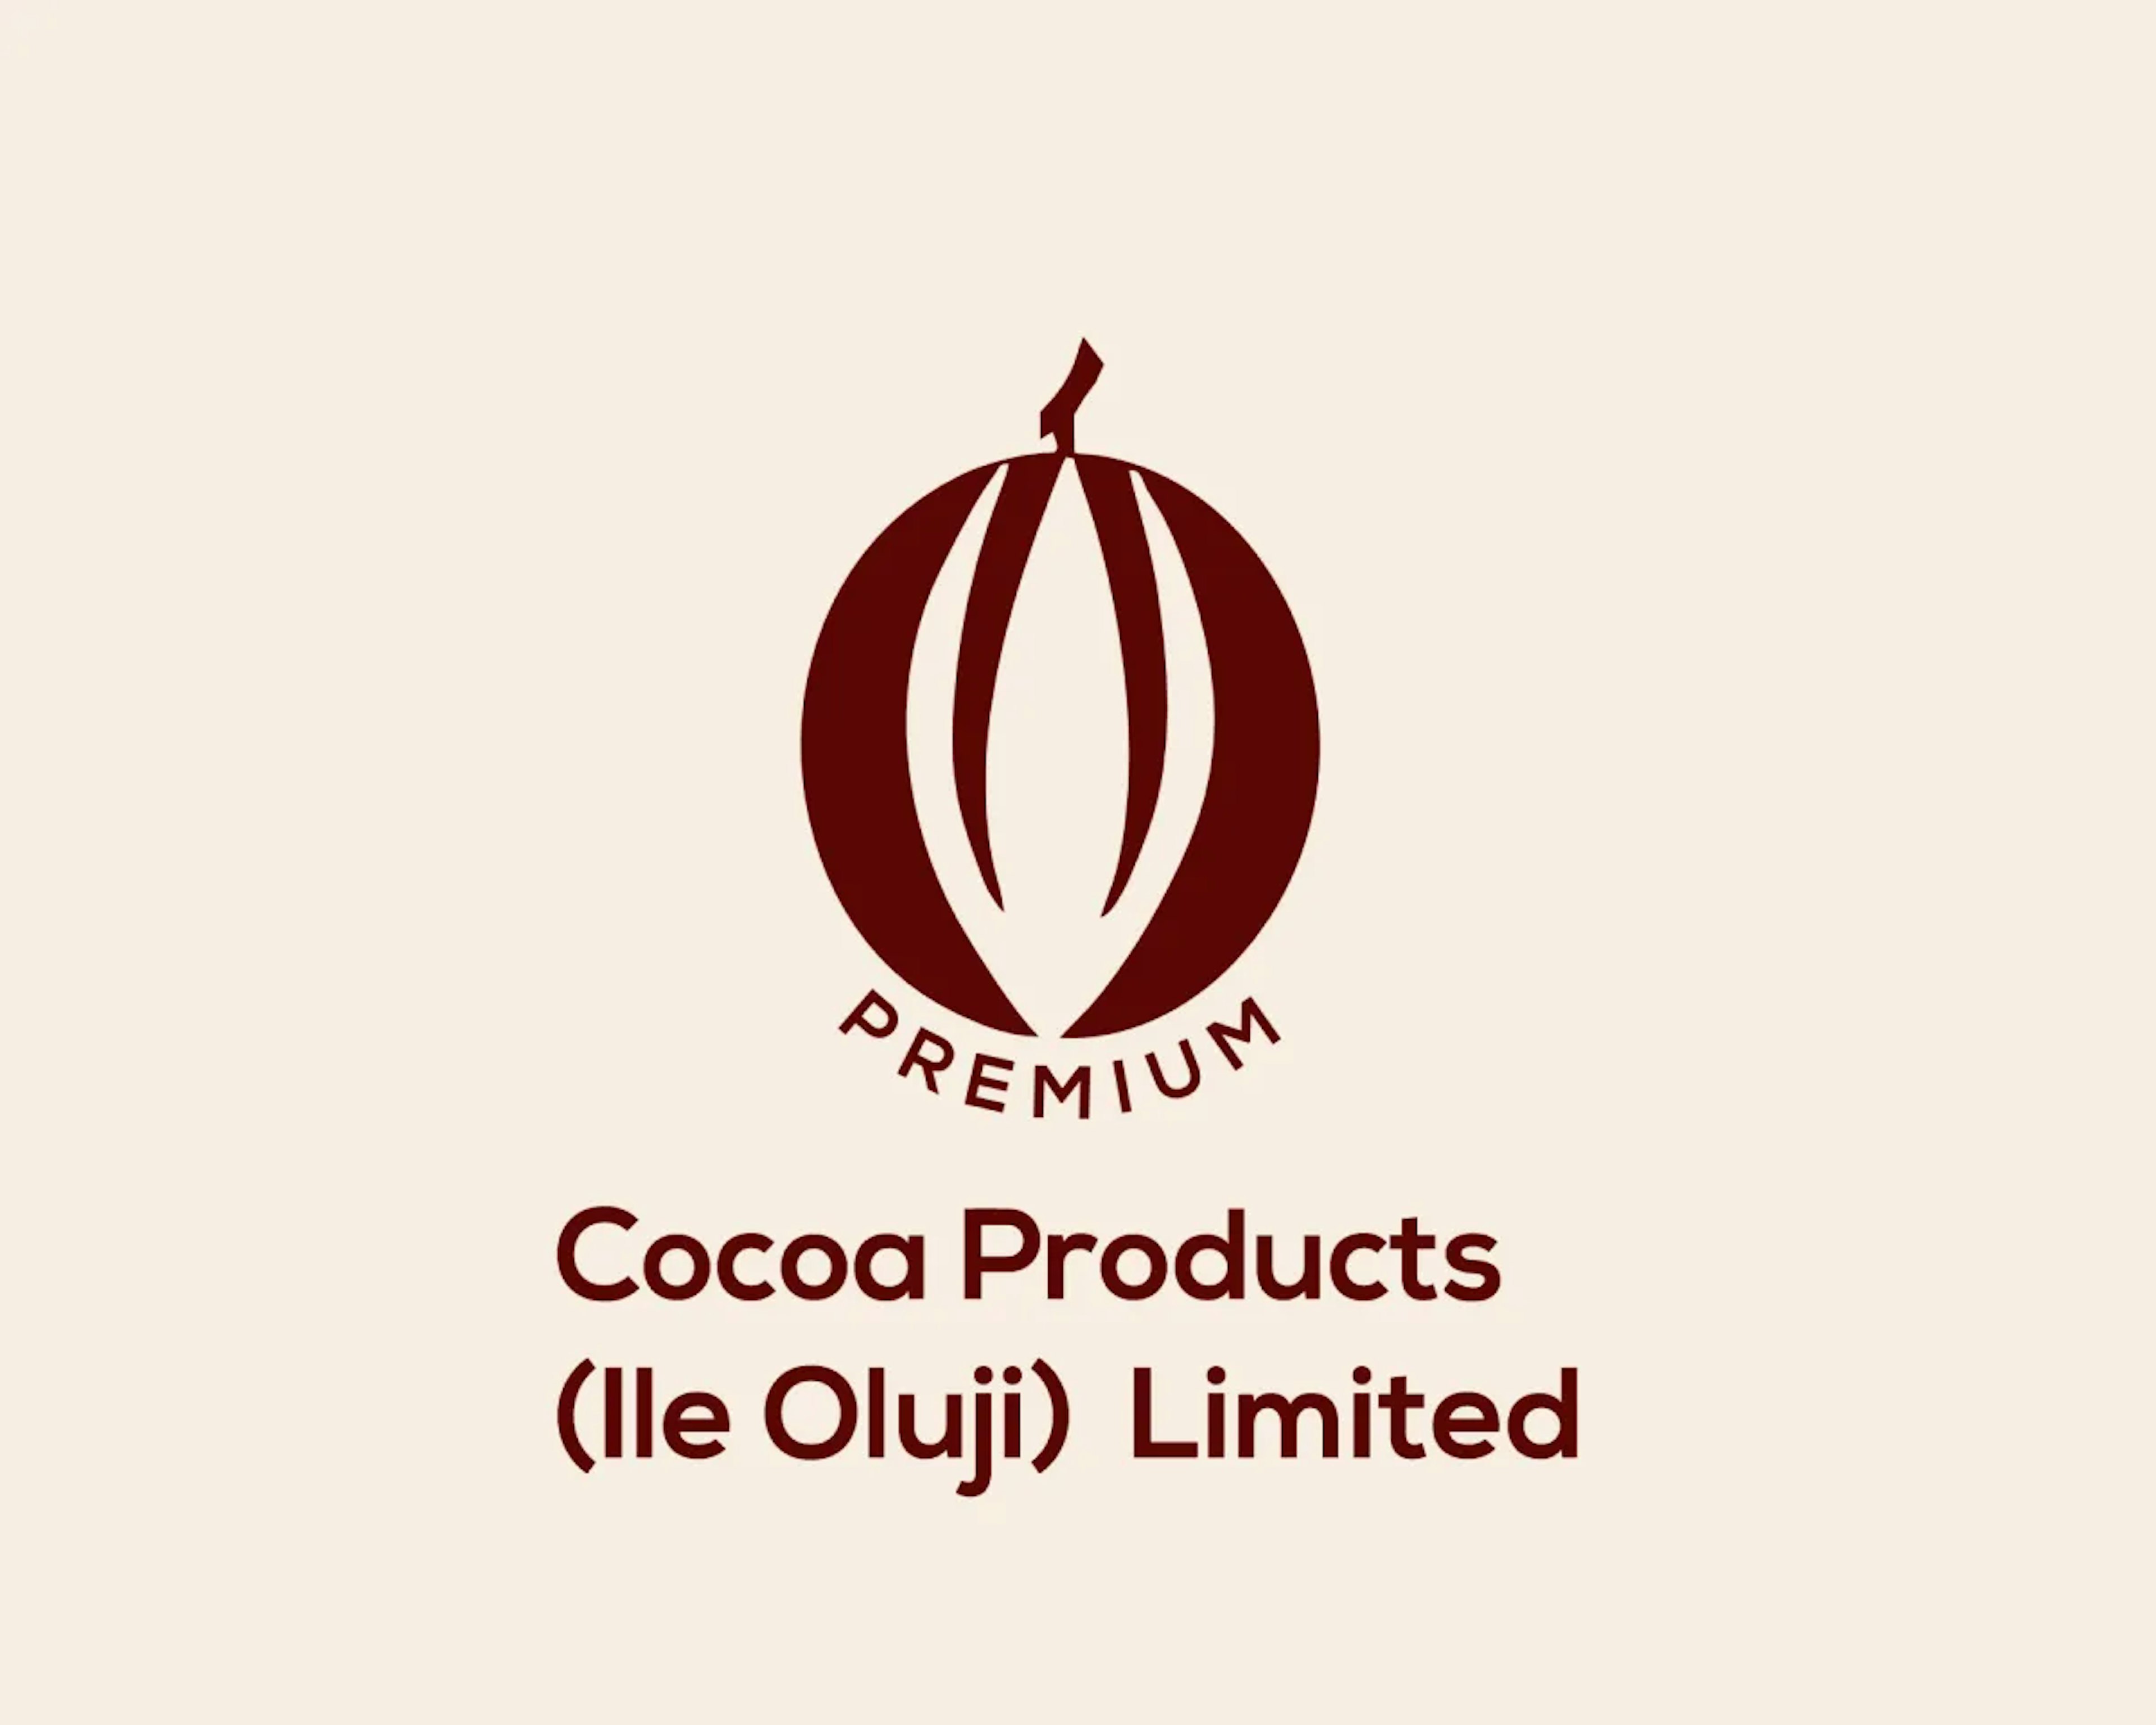 Premium Cocoa Products Ile-Oluji Ltd.